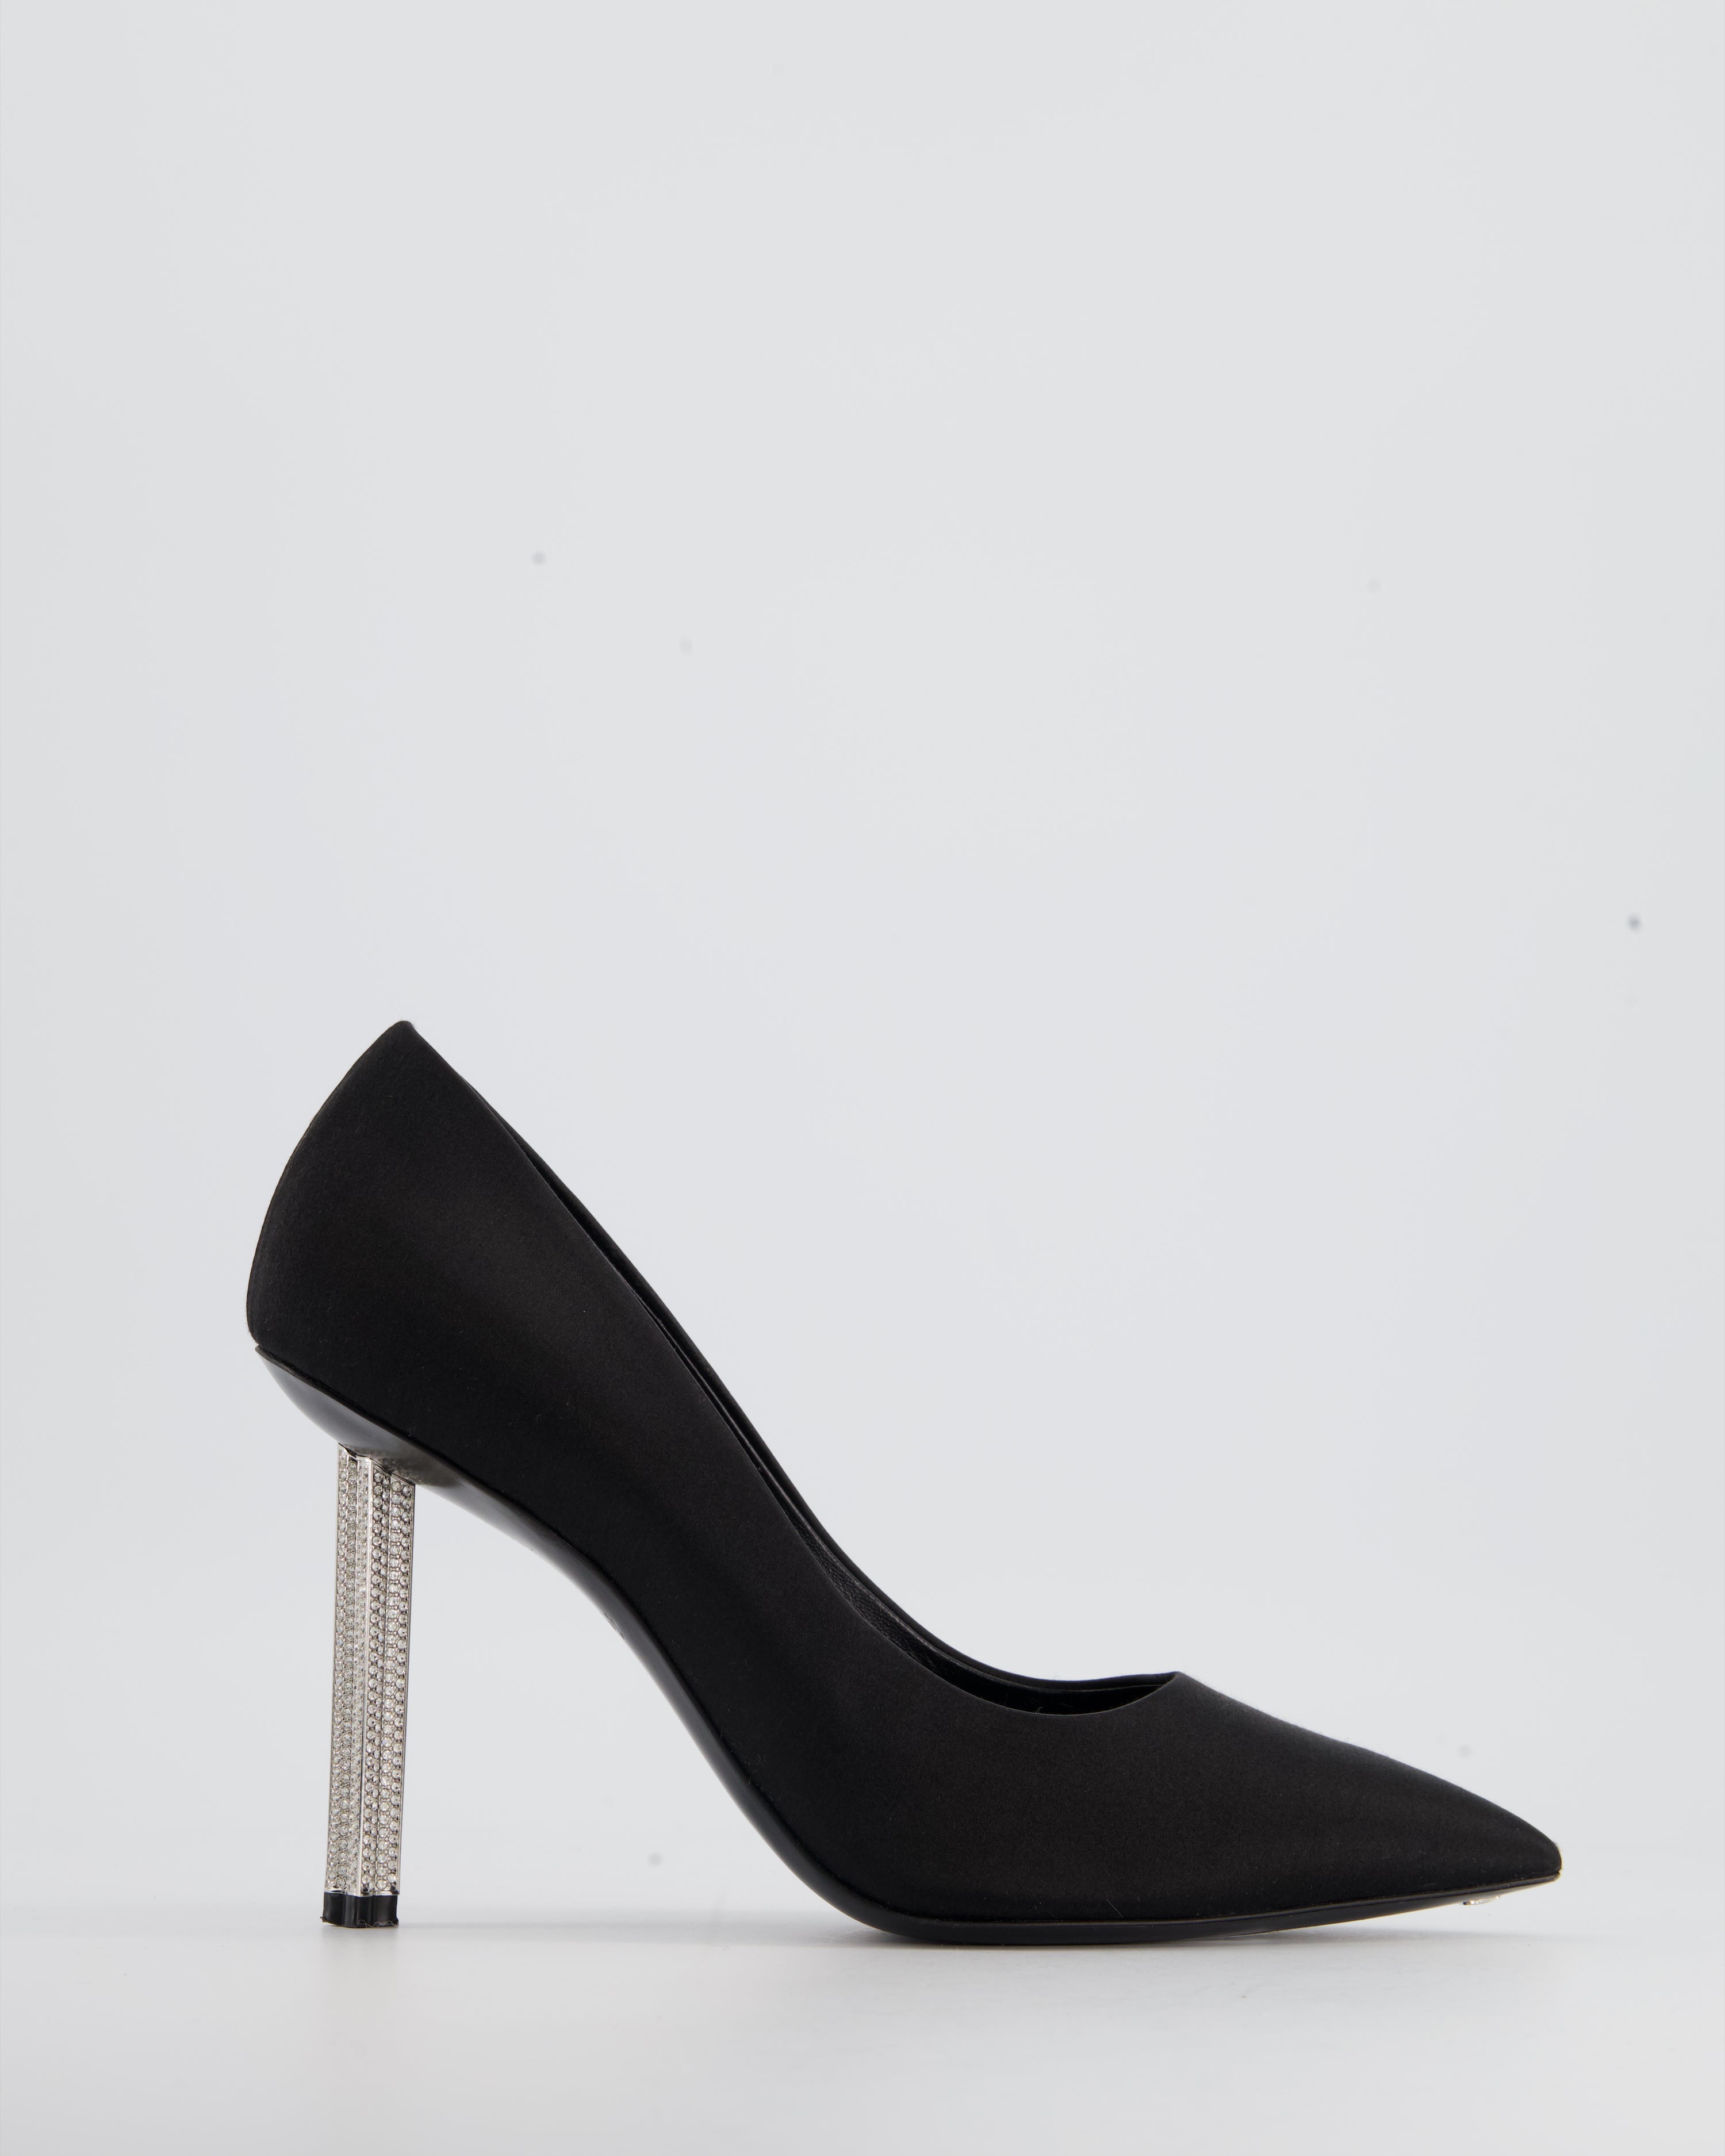 Louis Vuitton Black Satin Crystal Toe Heels Pumps Size 38.5